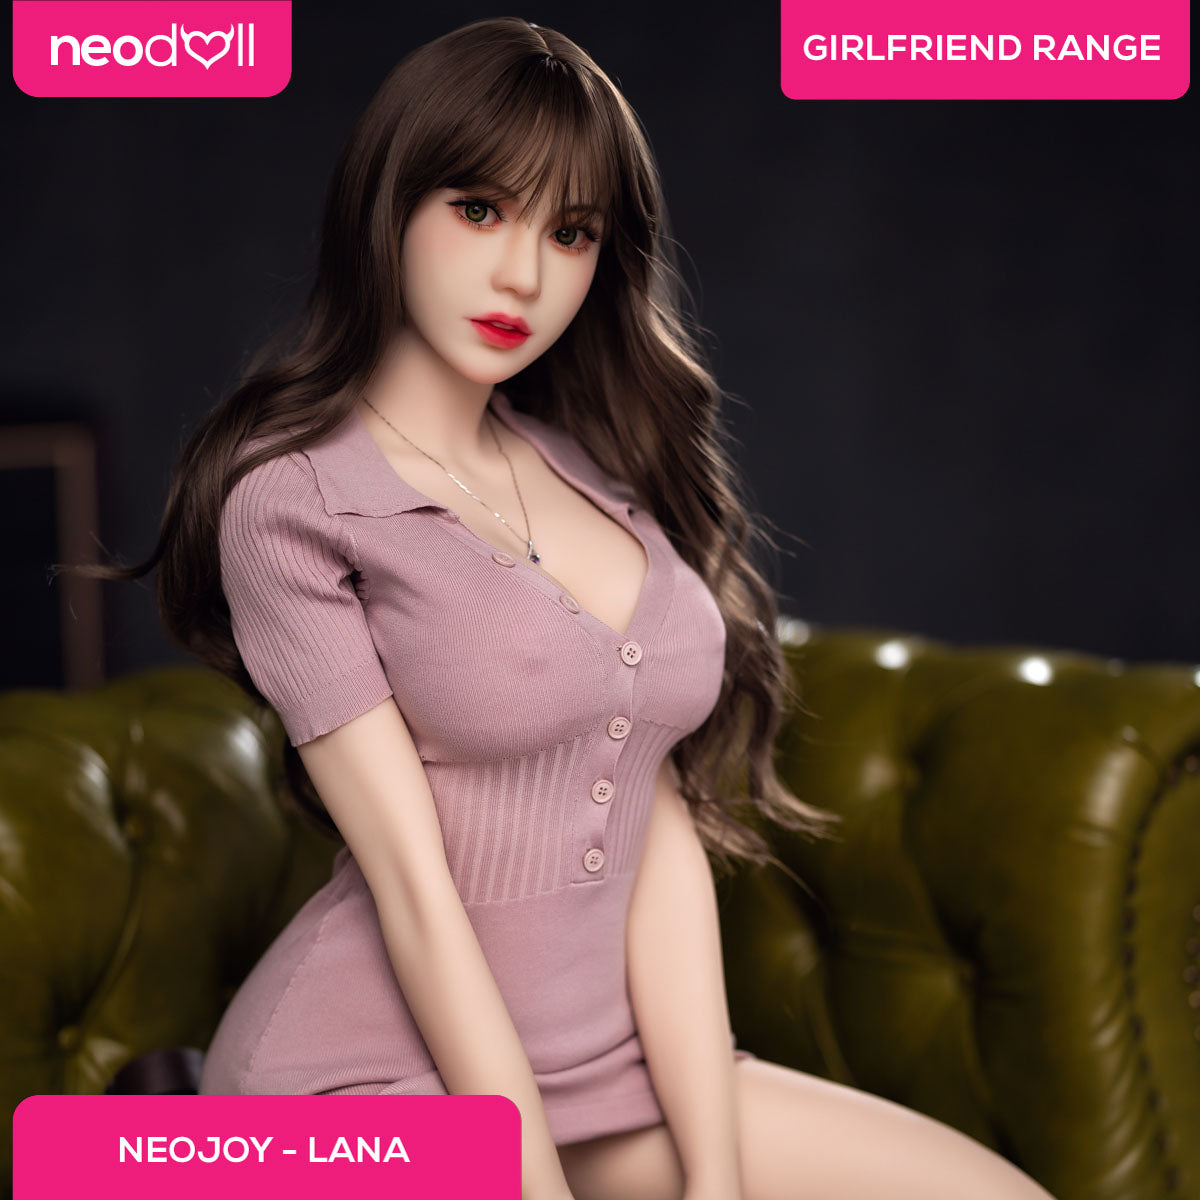 Sex Doll Lana | 165cm Height | Natural Skin | Shrug & Standing | Neodoll Girlfriend